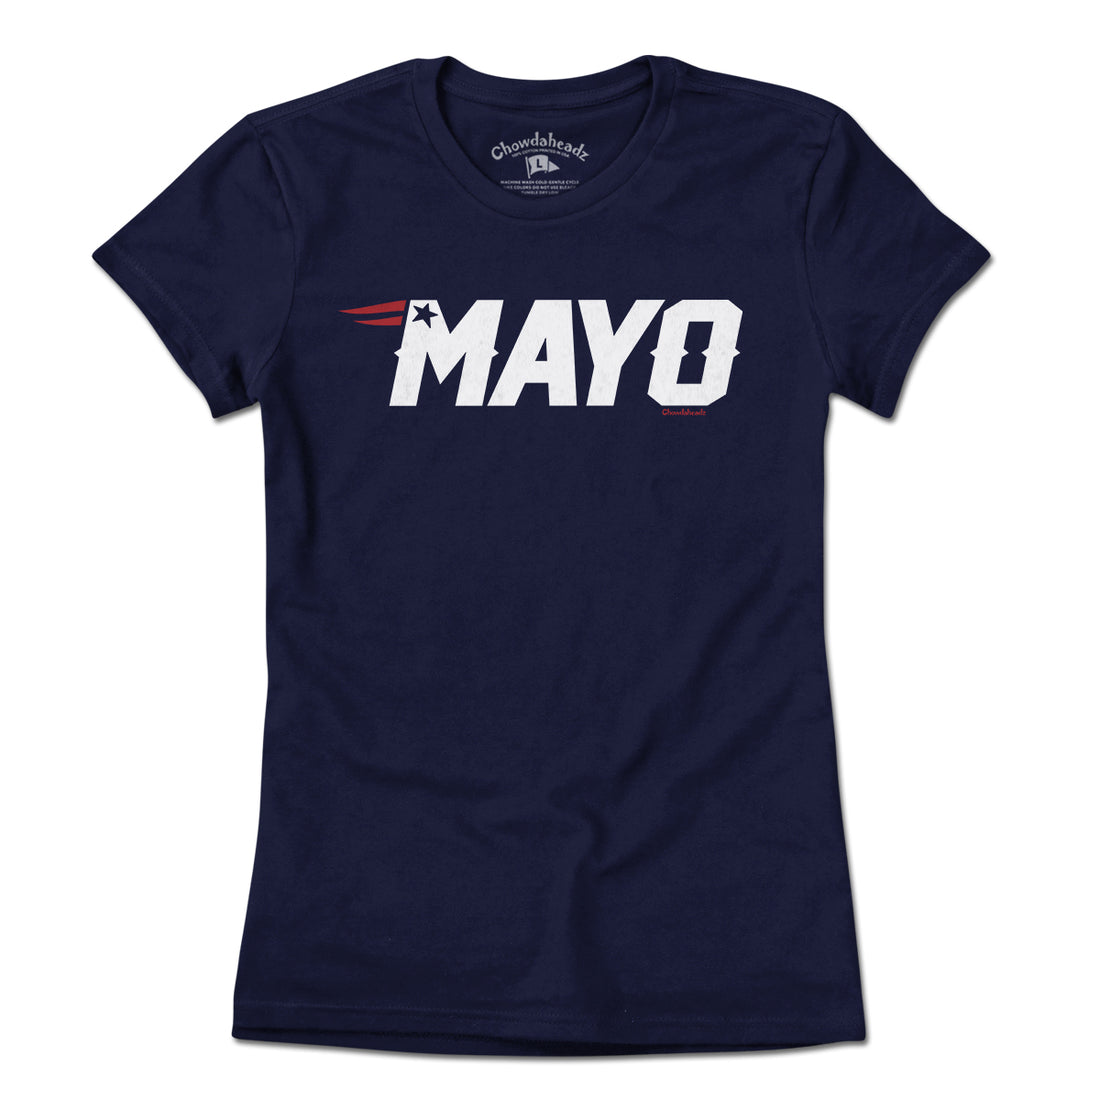 Mayo New England T-Shirt - Chowdaheadz